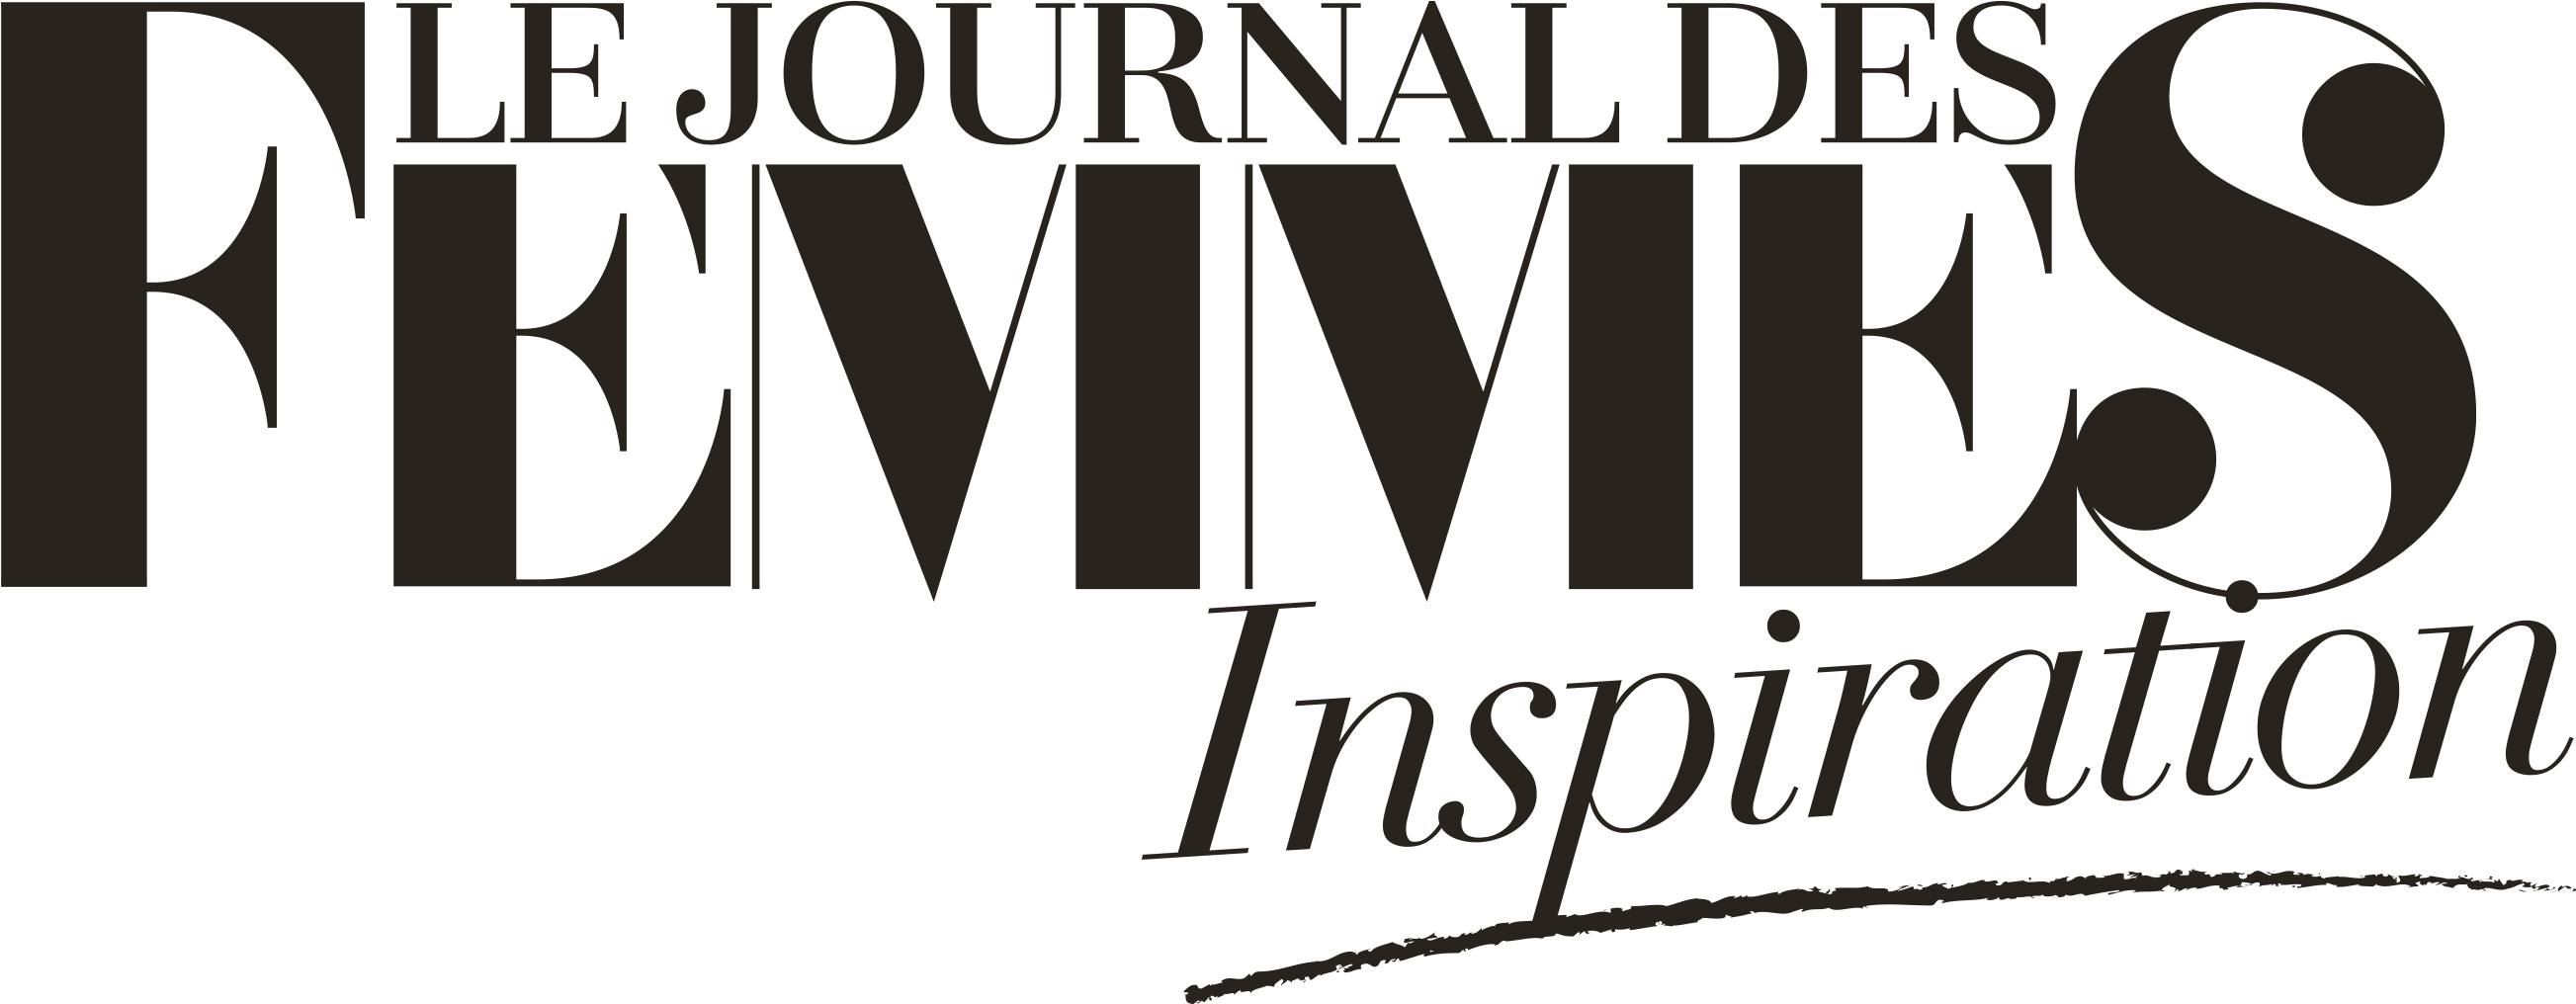 Logo Journal Des Femmes (3000x1500)